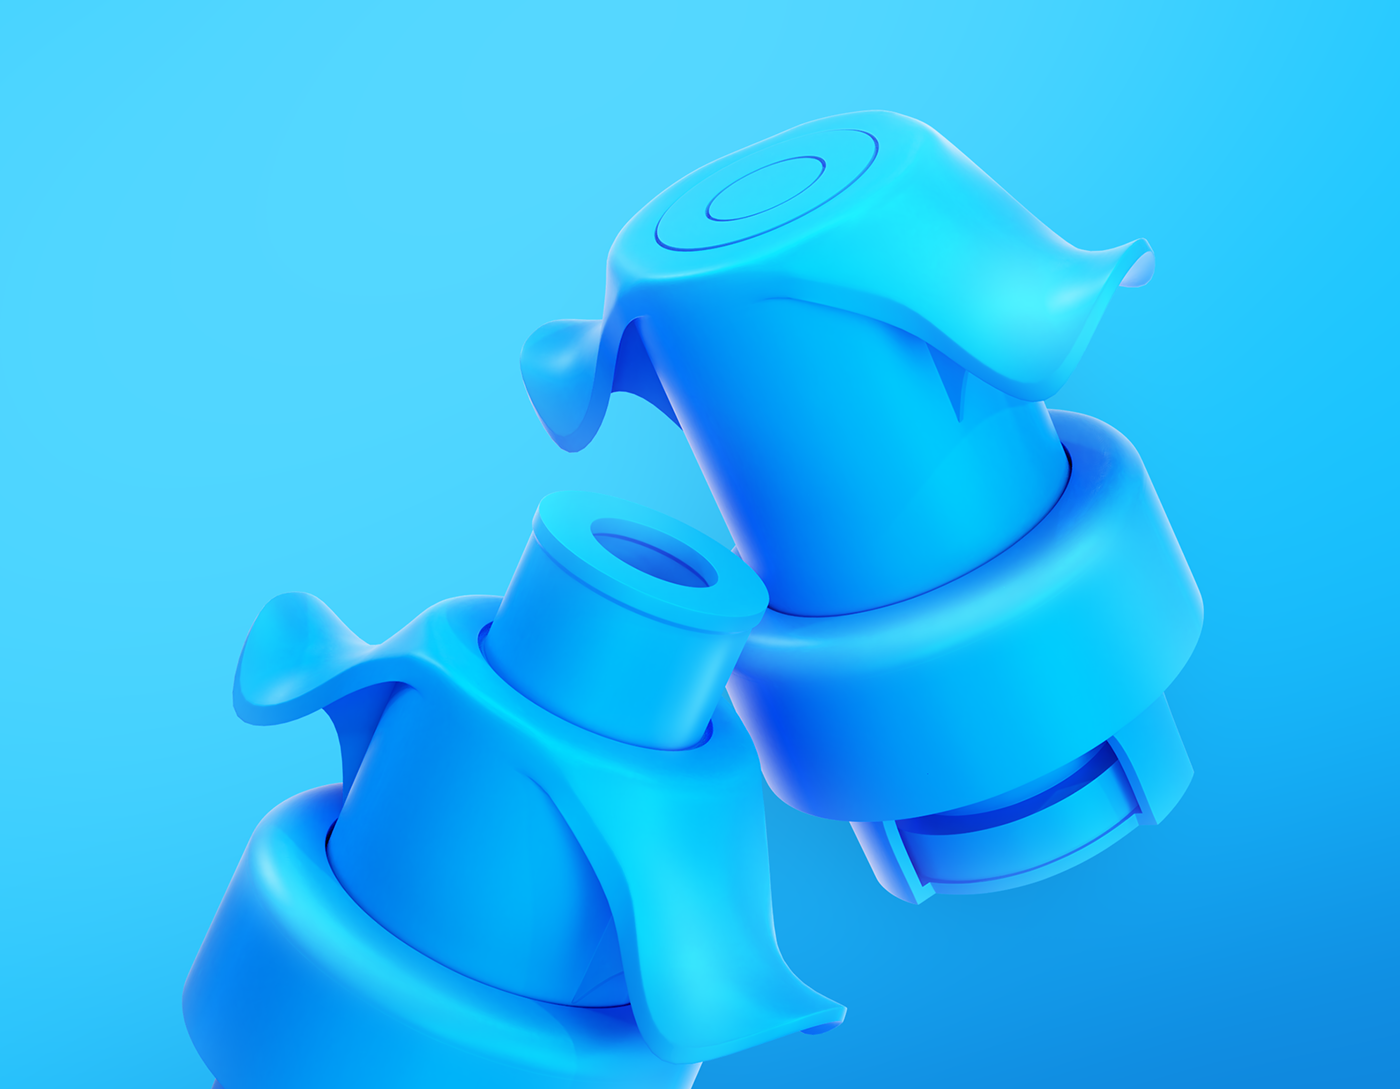 concept laundry detergent Liquid Dosing cap mechanism interaction automatic design product